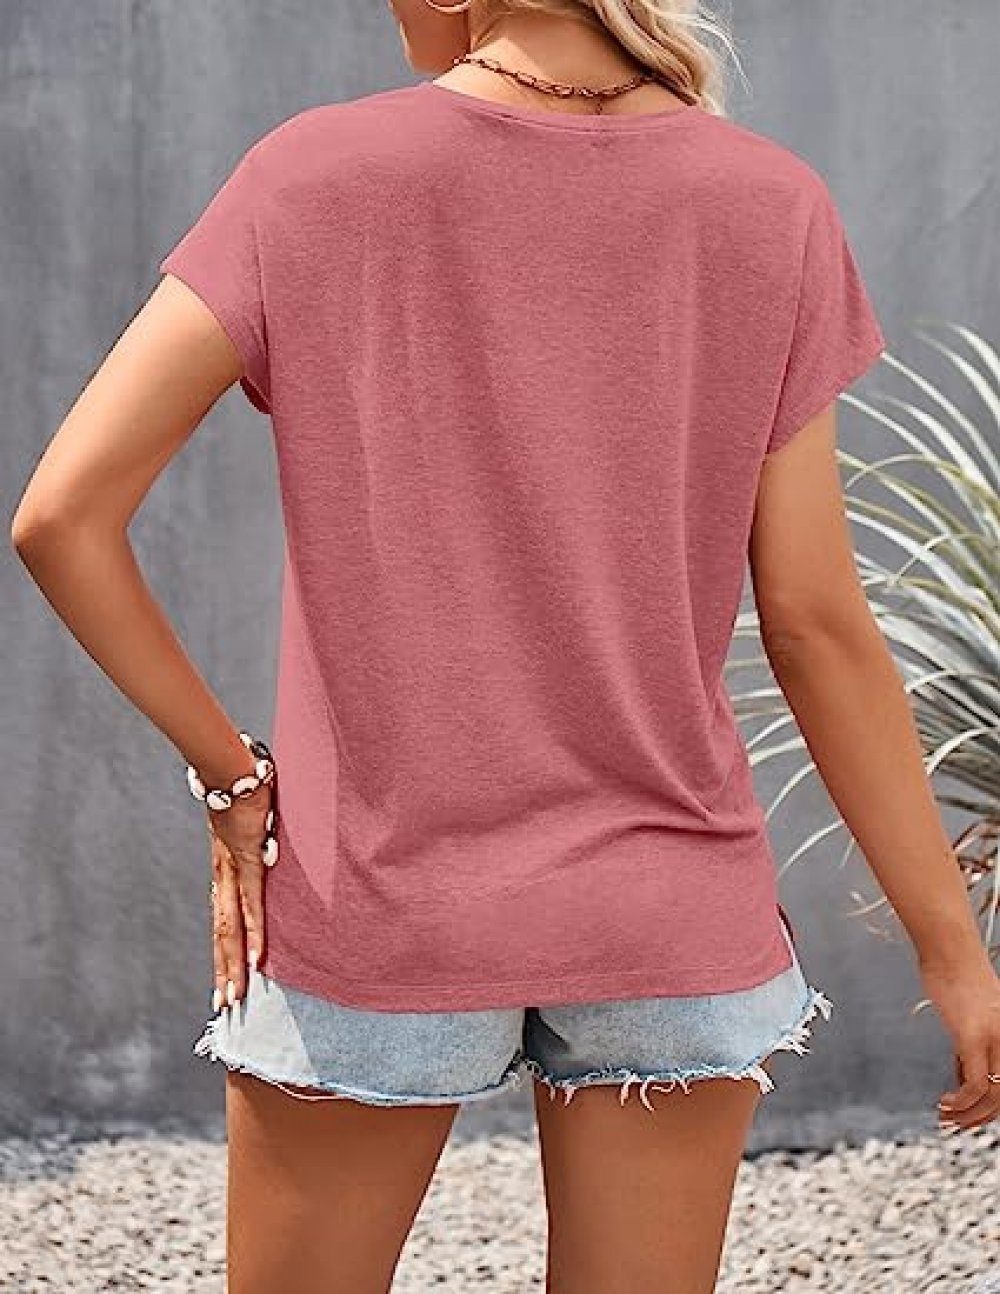 selected Rosa lockeres V-Shirt carefully V-Ausschnitt – mit Damen-Oberteil Sommer-T-Shirt